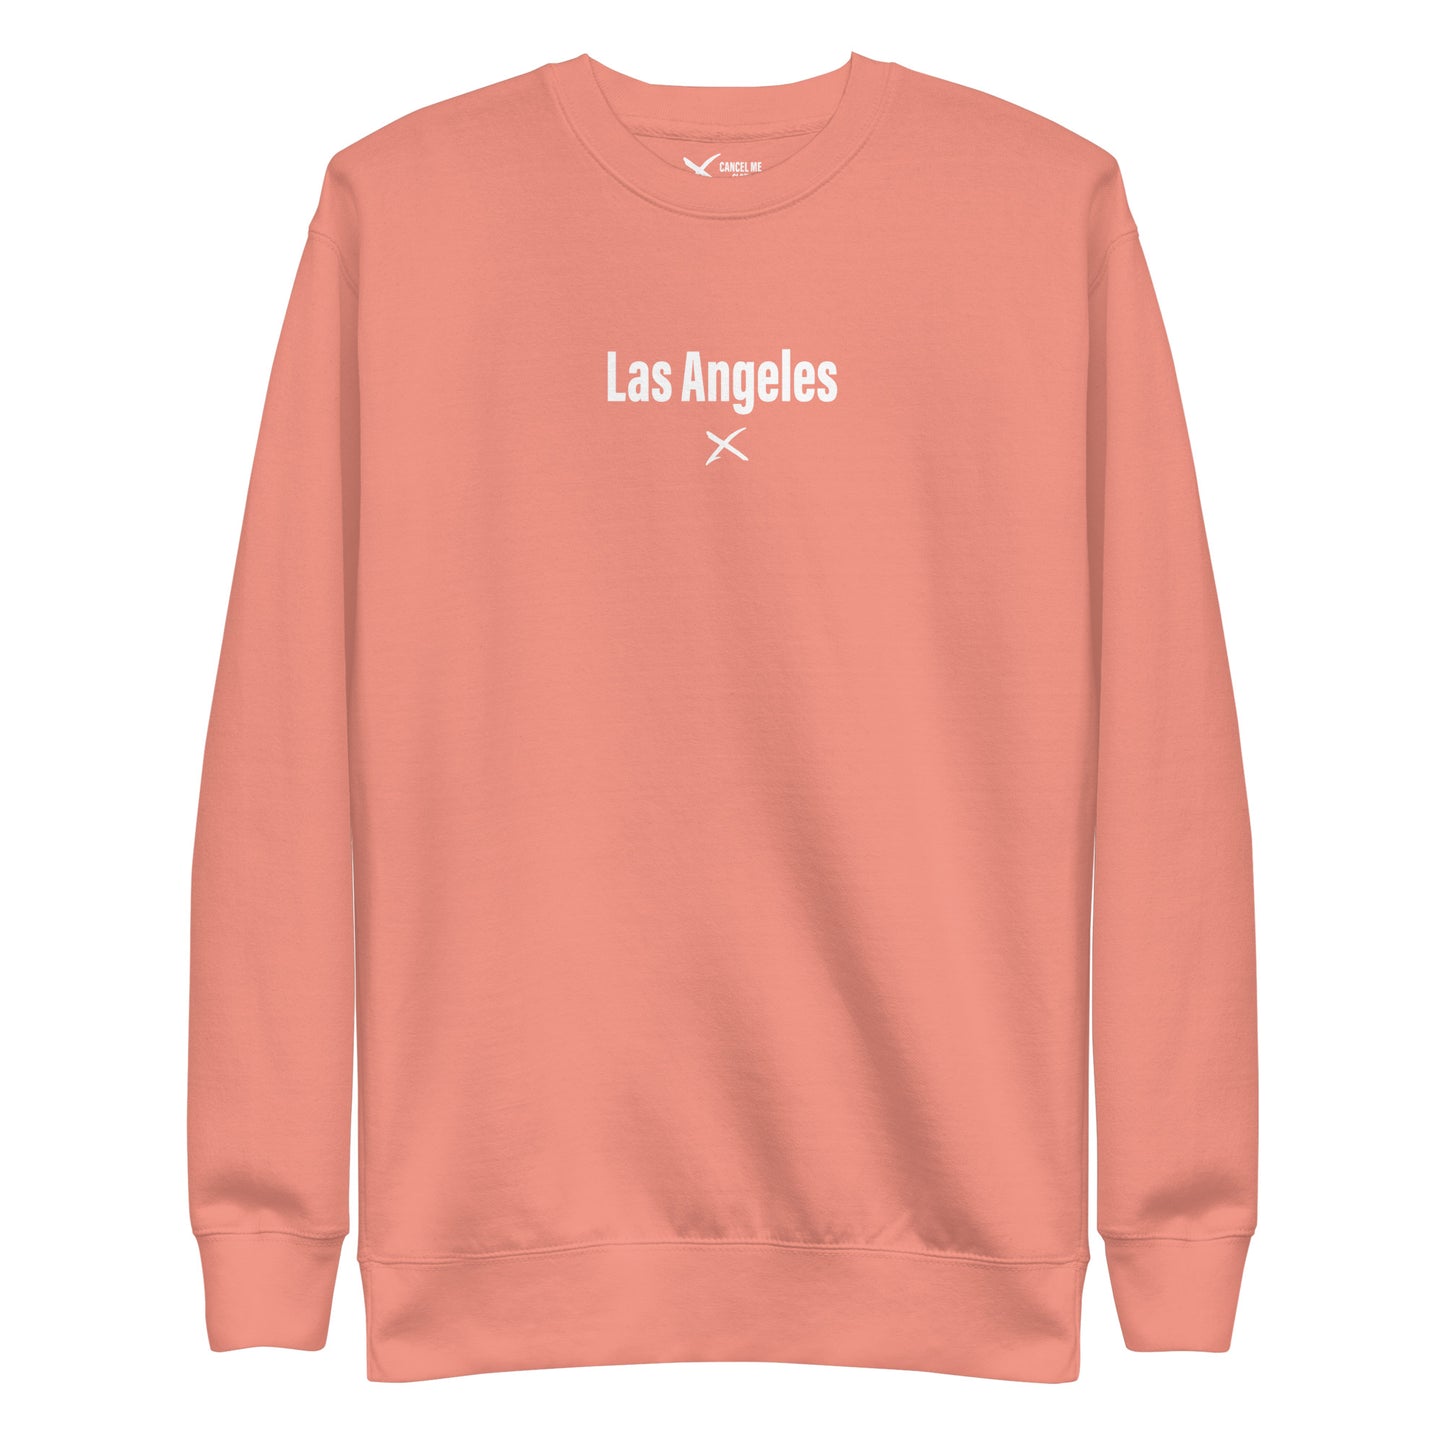 Las Angeles - Sweatshirt